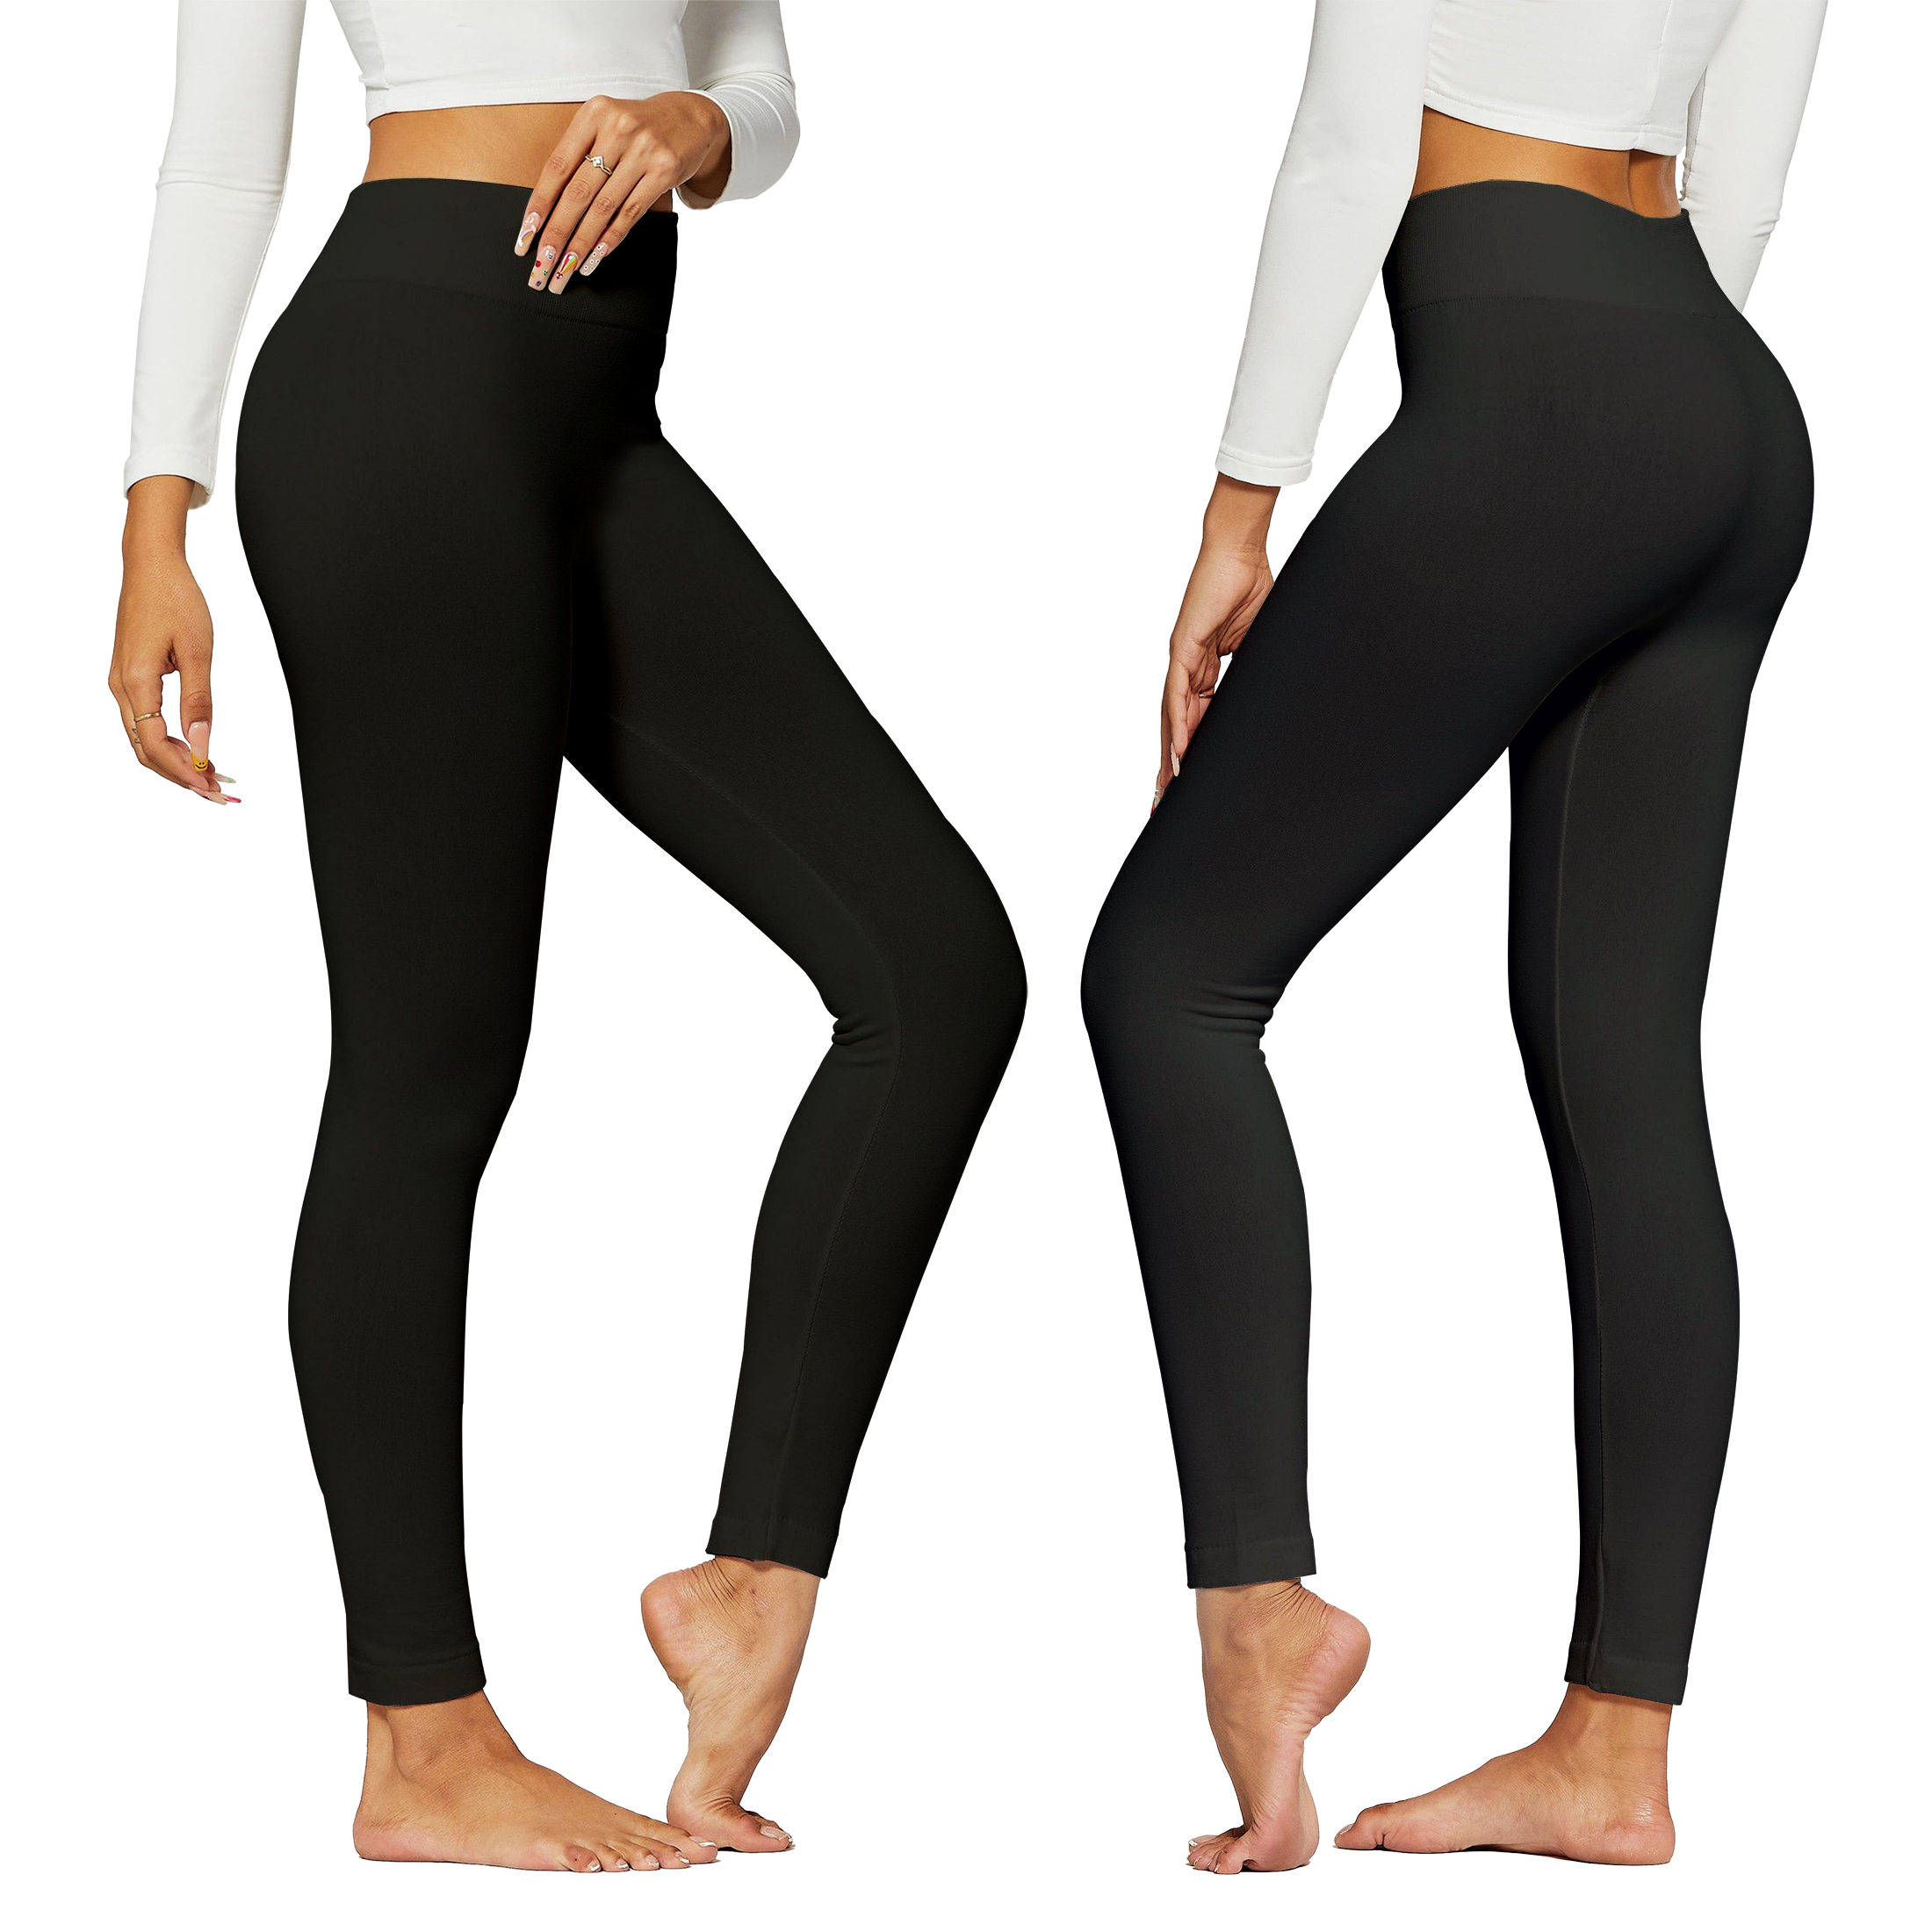 Women's Premium Quality High-Waist Fleece Lined Leggings (S-4X) - Black, 1X/2X